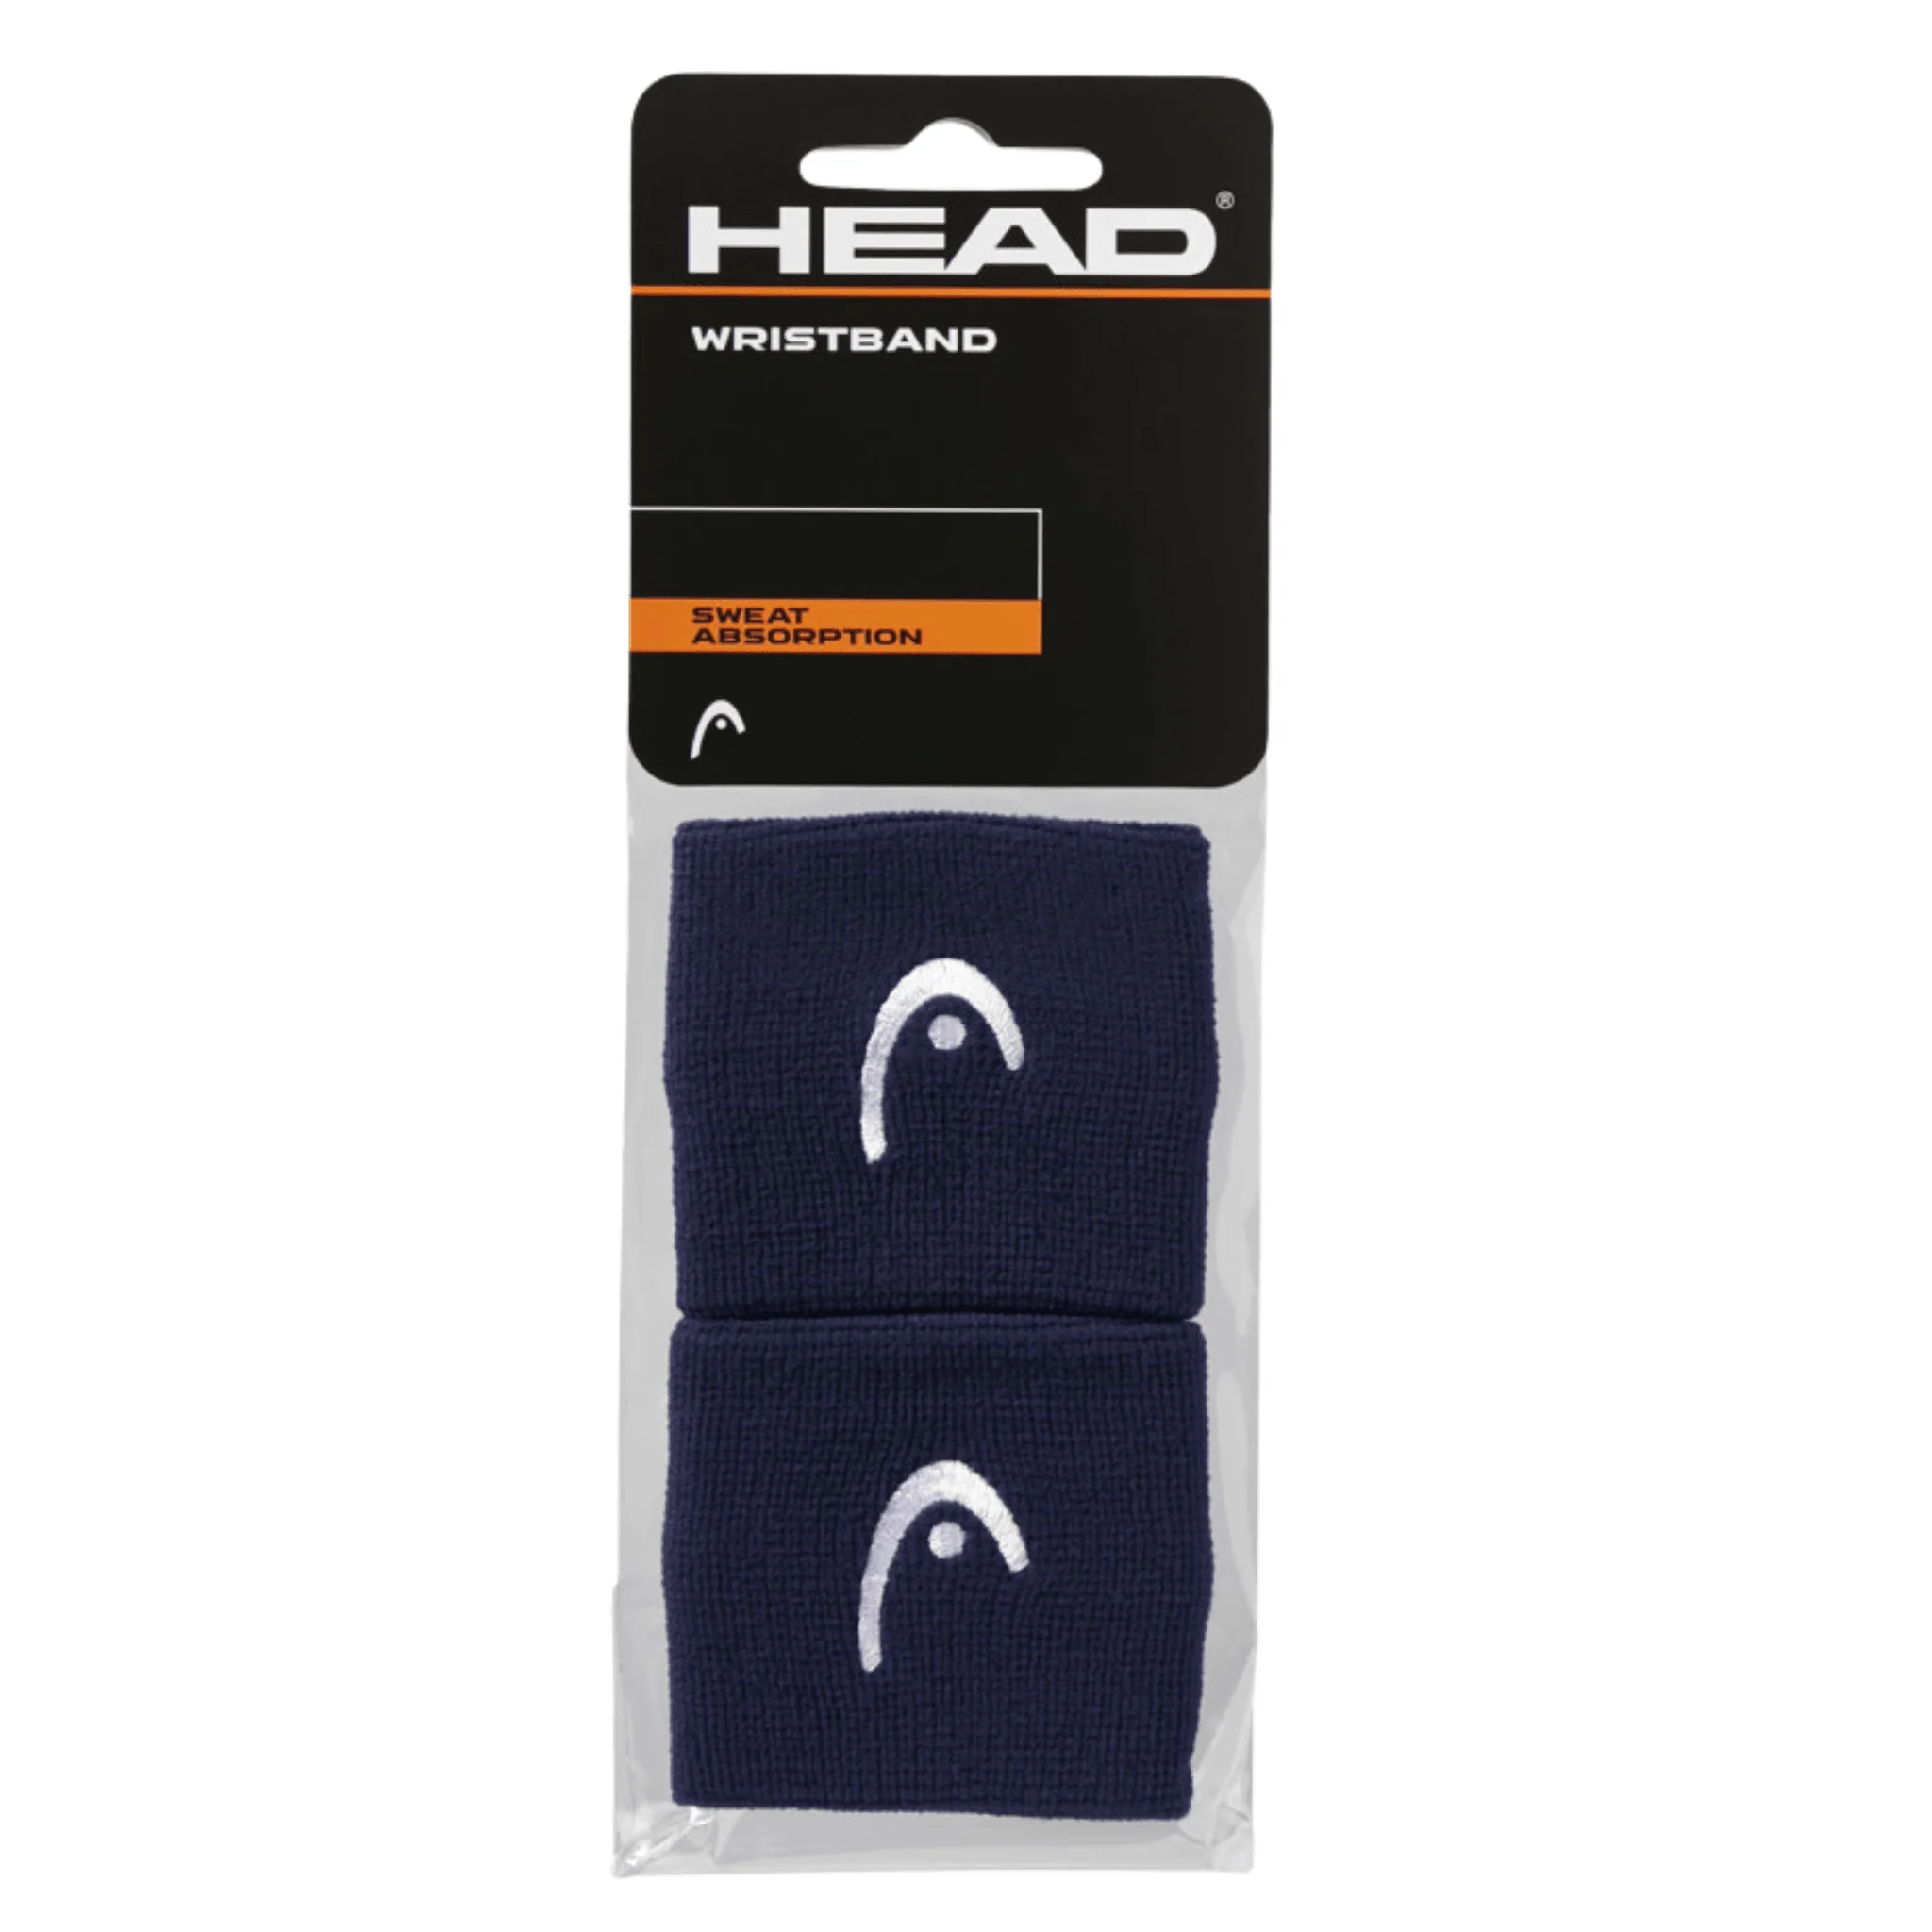 HEAD Wristband 2.5“